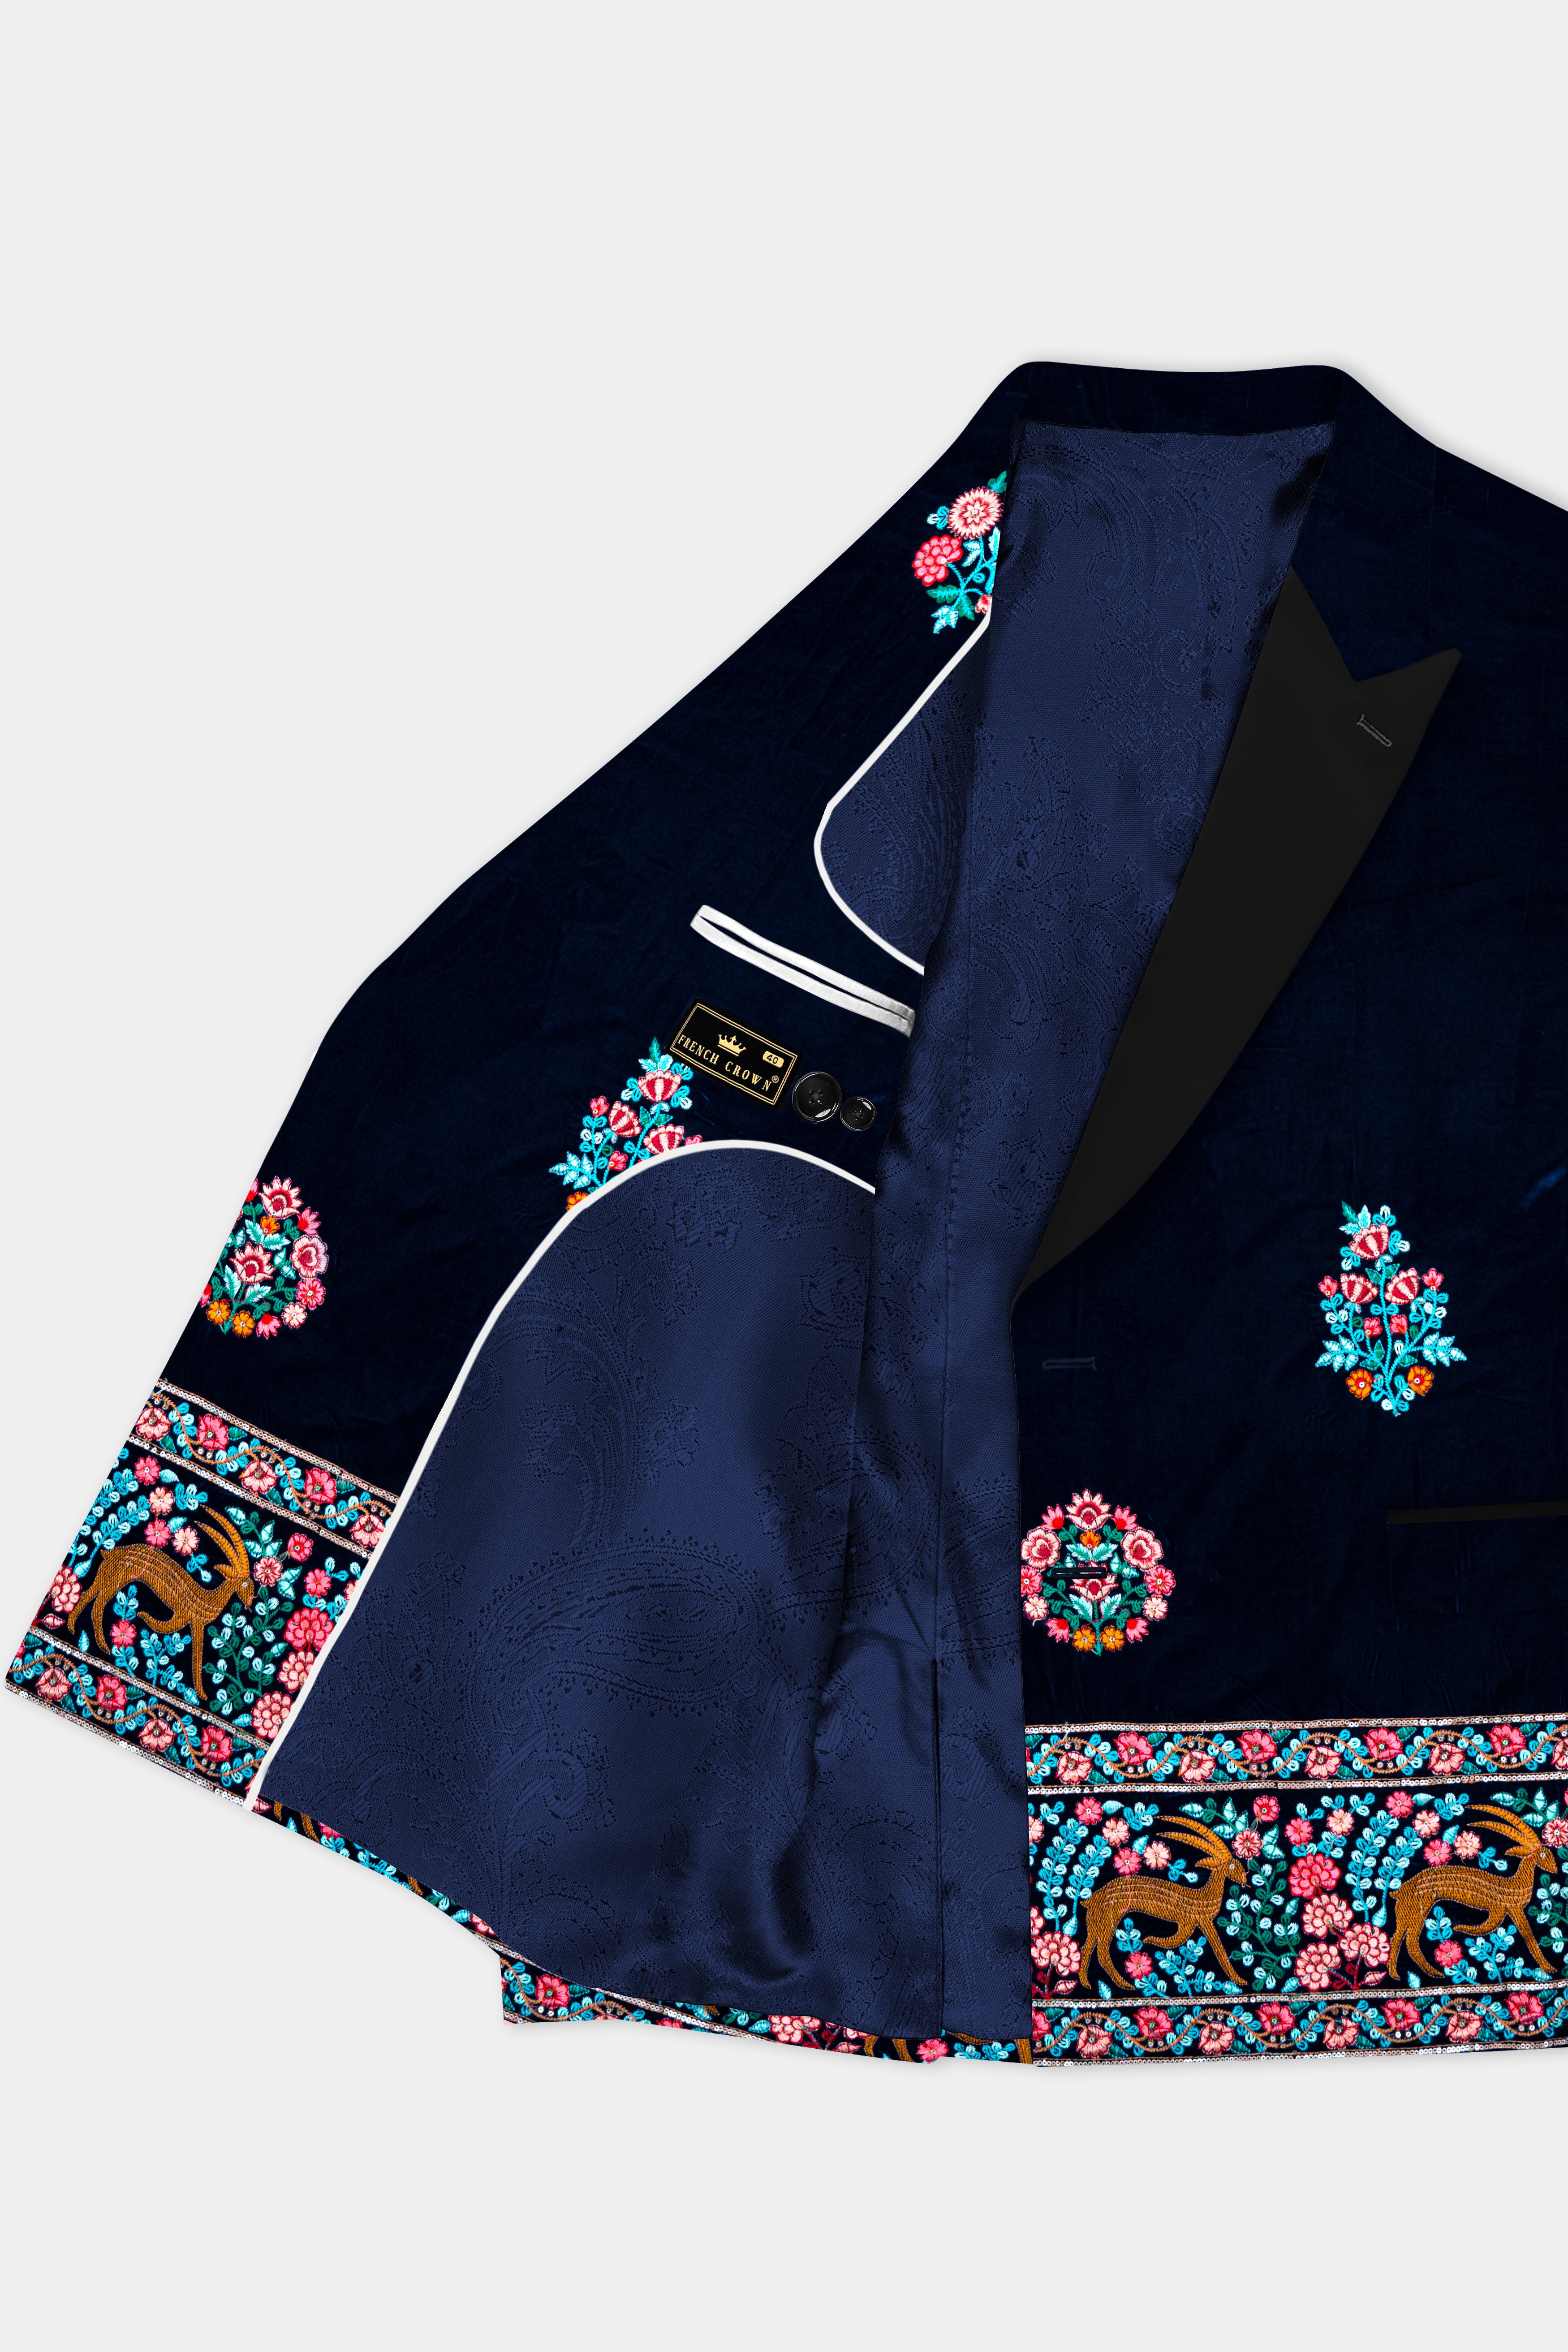 Tealish Blue Embroidered Butta printed Velvet Peak Collar Tuxedo Blazer